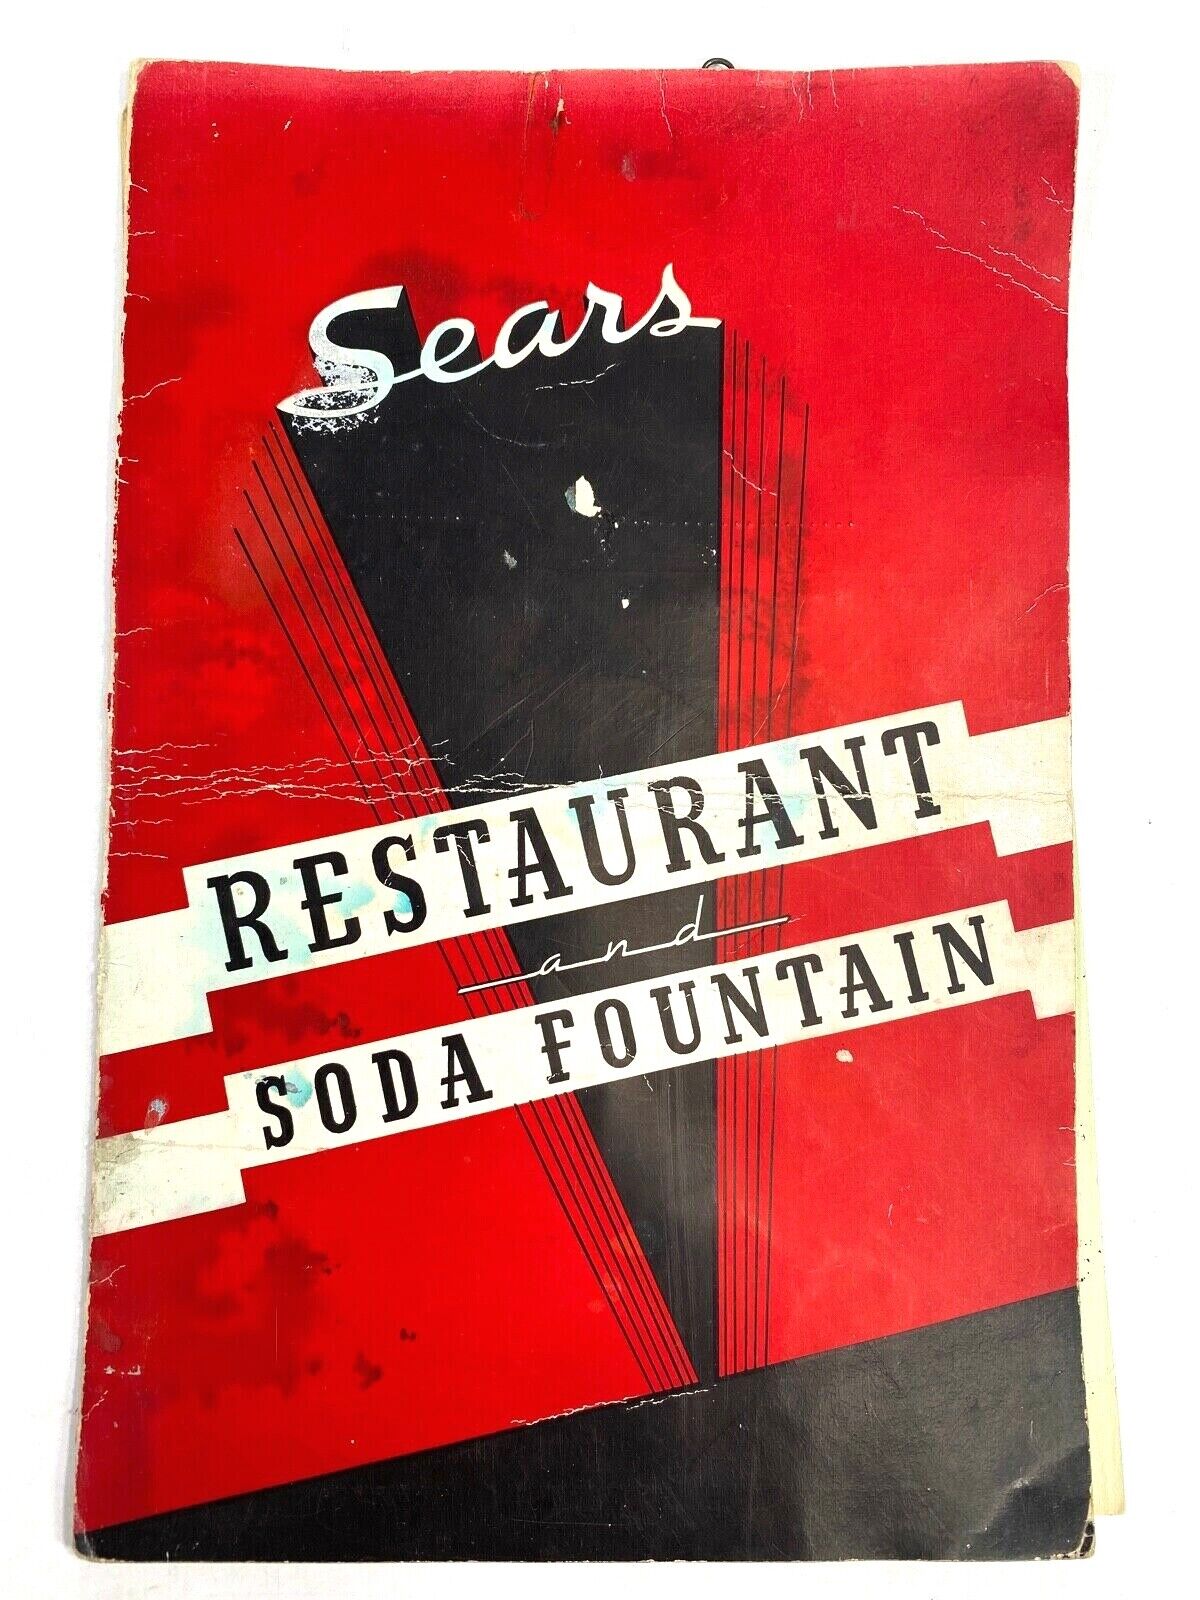 1949 SEARS RESTAURANT and SODA FOUNTAIN vintage luncheon menu PORTLAND, OREGON